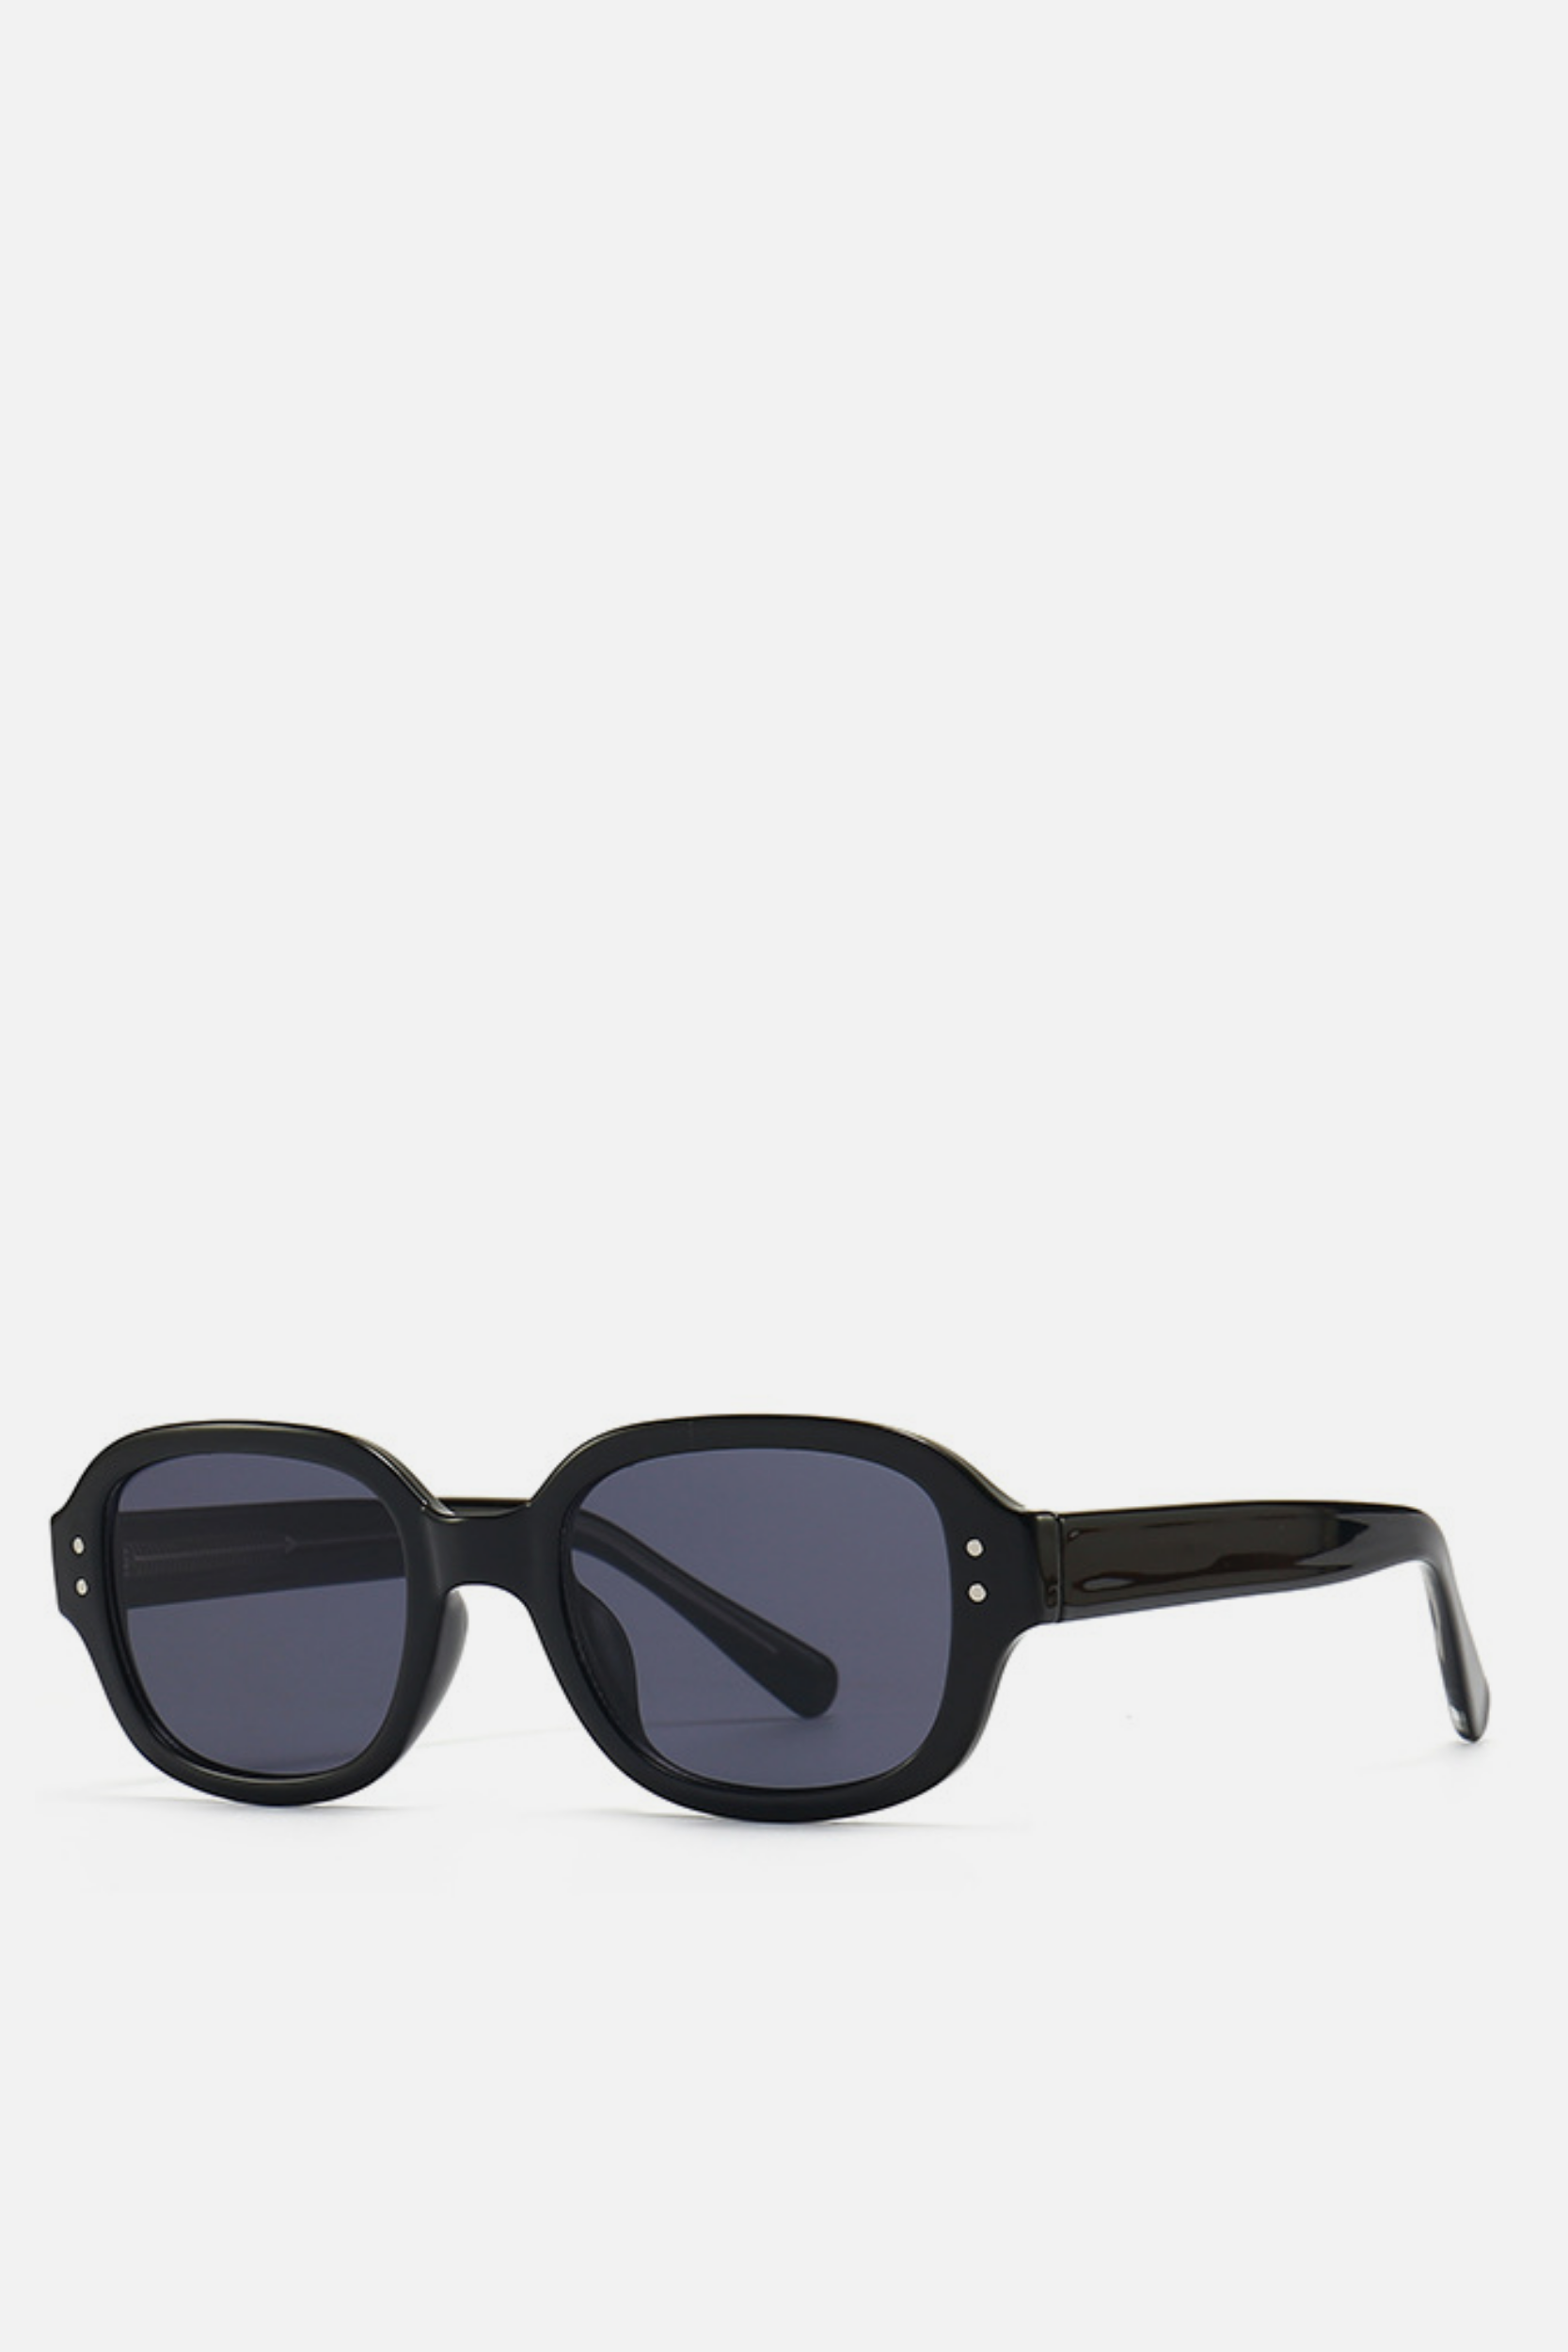 SICILY Black Rounded Sunglasses